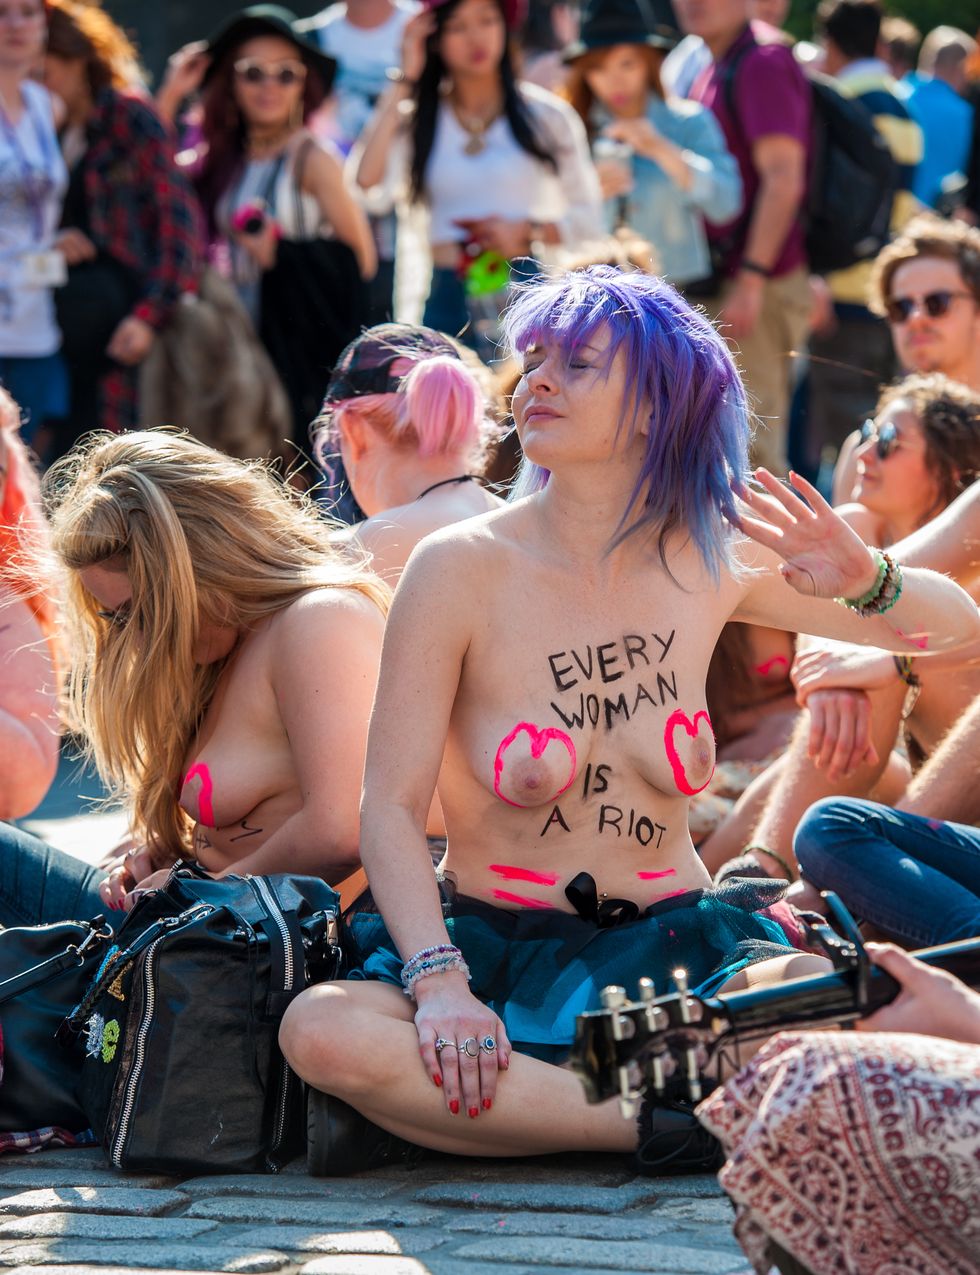 free the nipple campaign at edinburgh fringe festival 2015